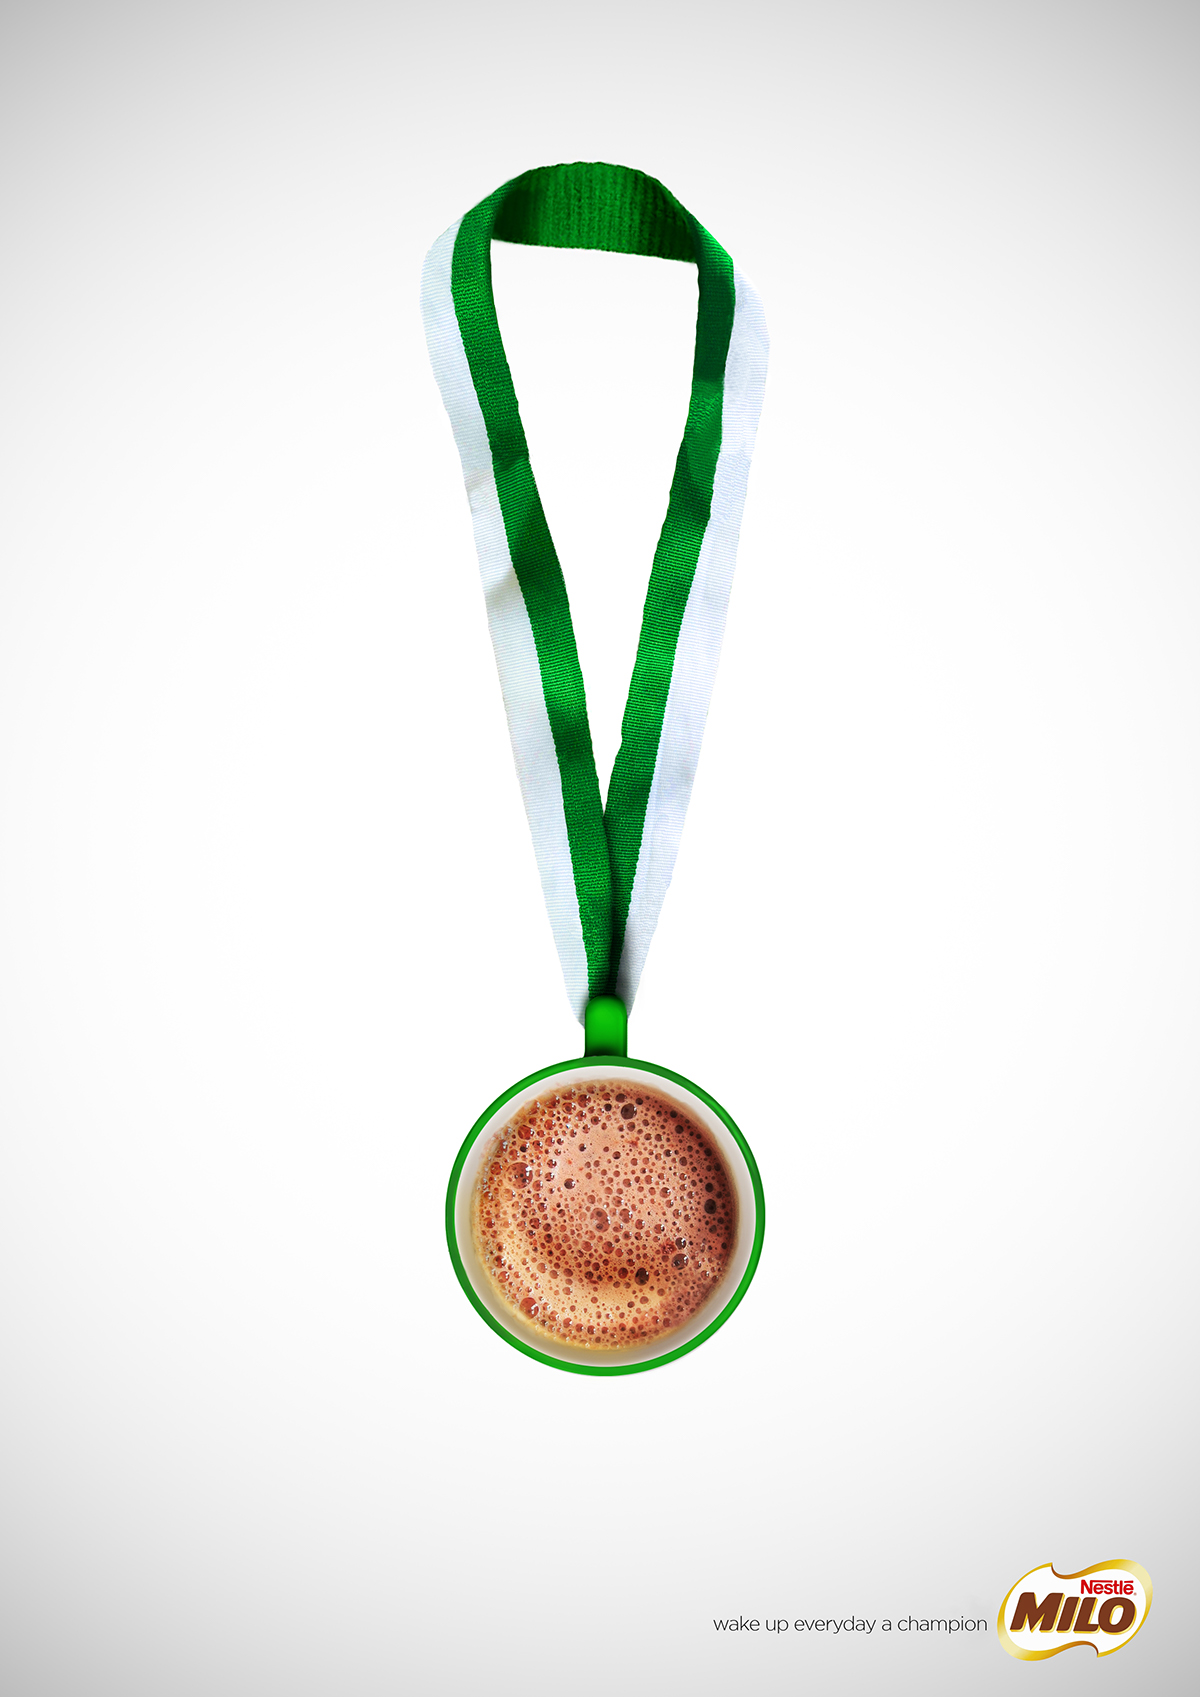 Milo energydrink champion drink prints ads Medal cup nestle milo print ad nestle print ad poster